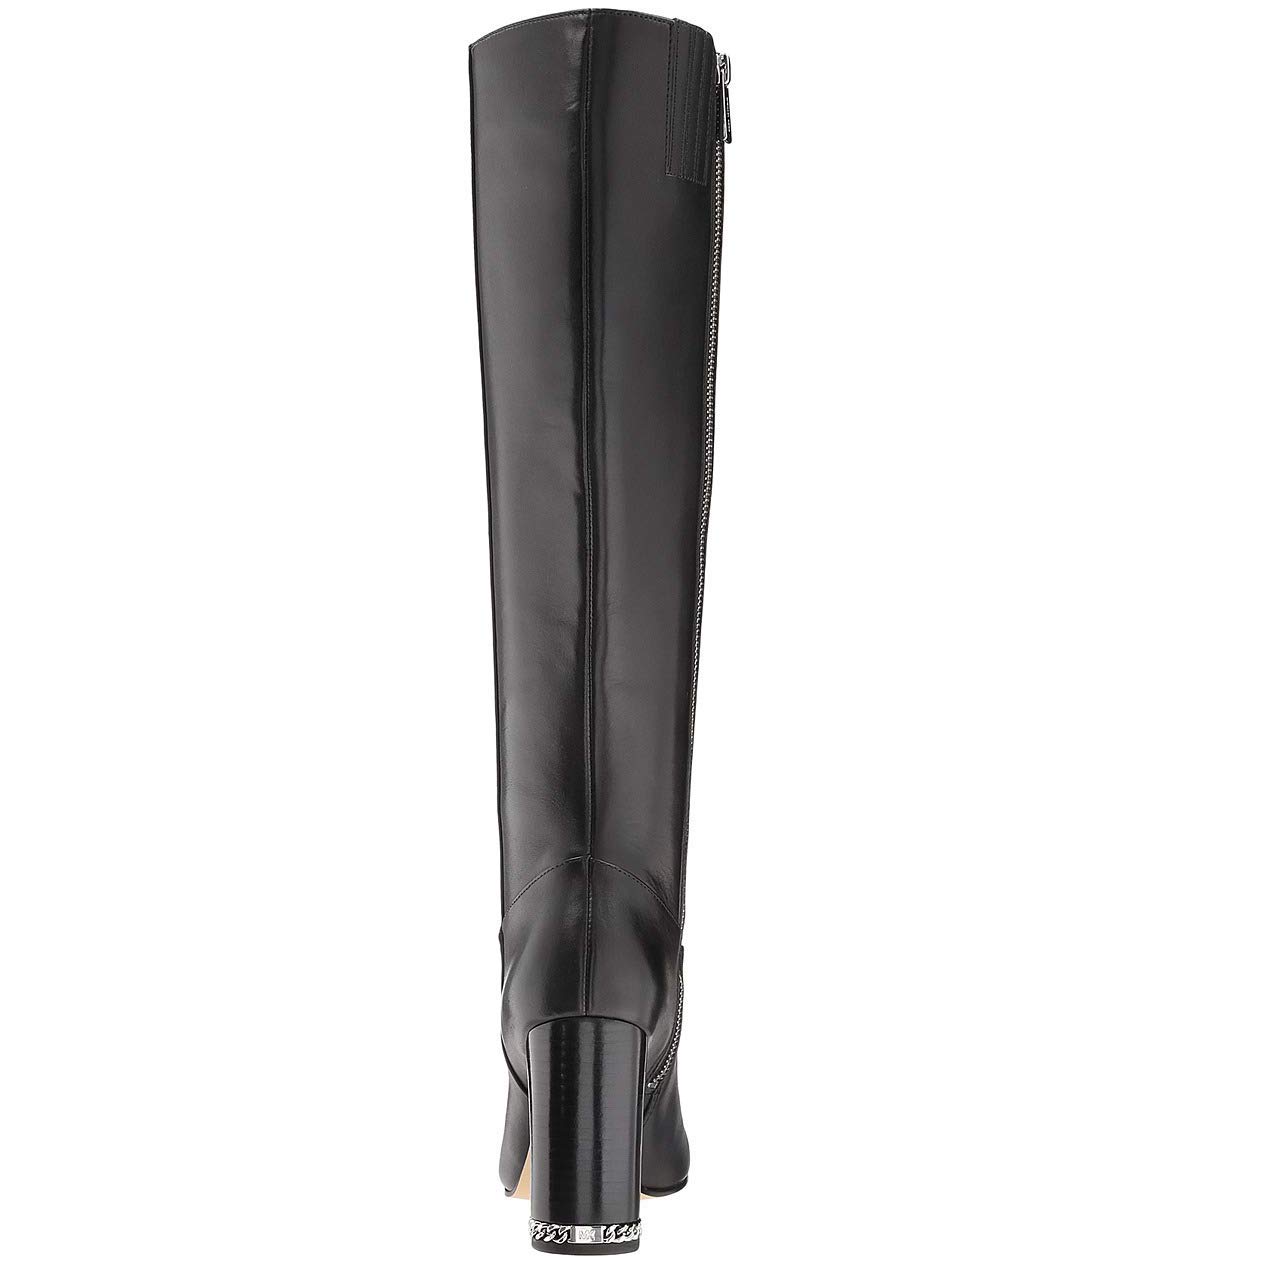 Michael Kors Womens Walker Leather Almond Toe Knee High Fashion, Black, Size 9.5 - image 5 of 6